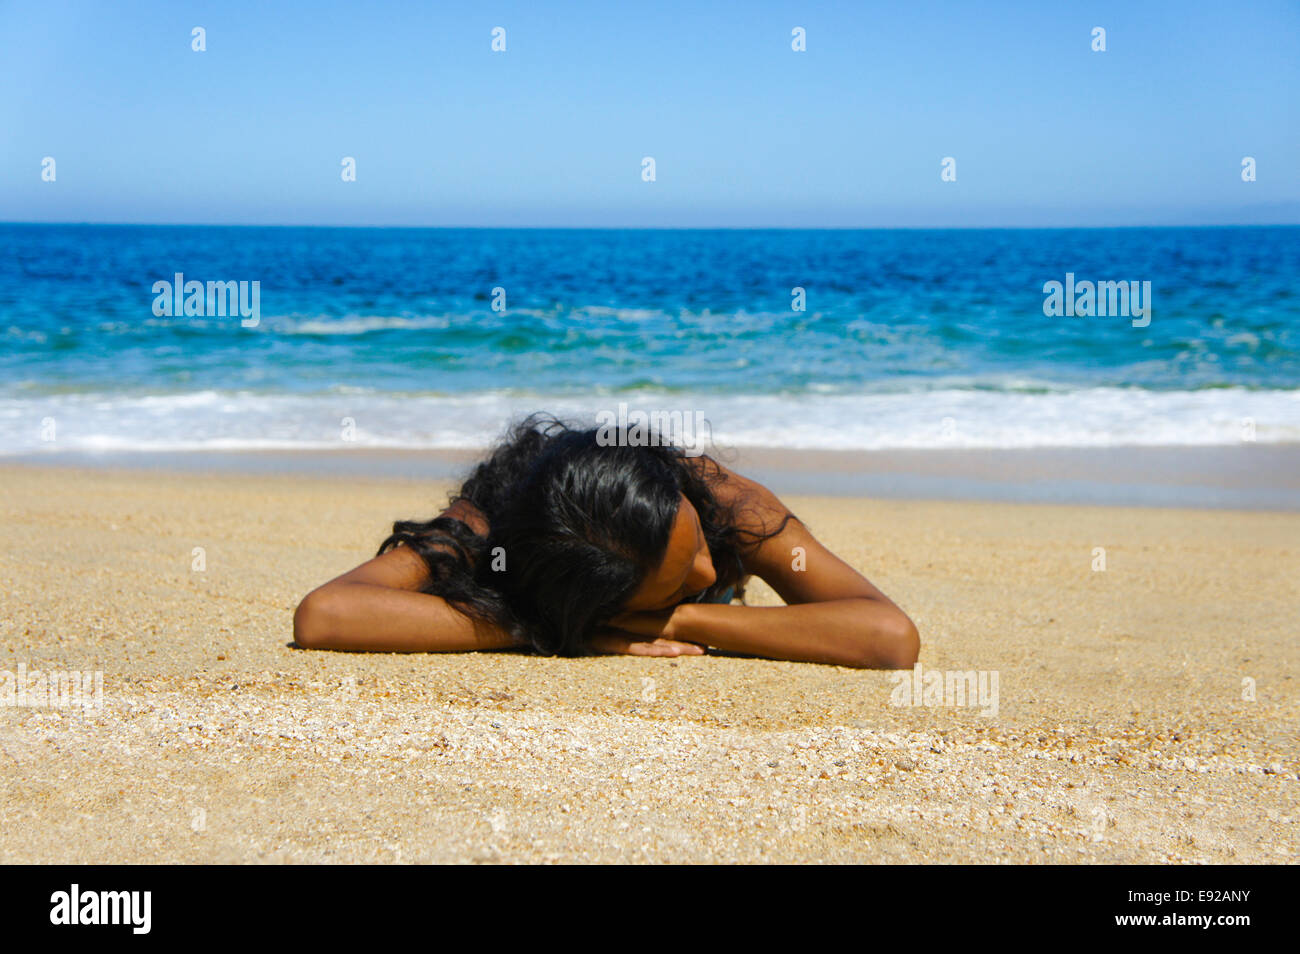 Lying on the beach Stock Photo